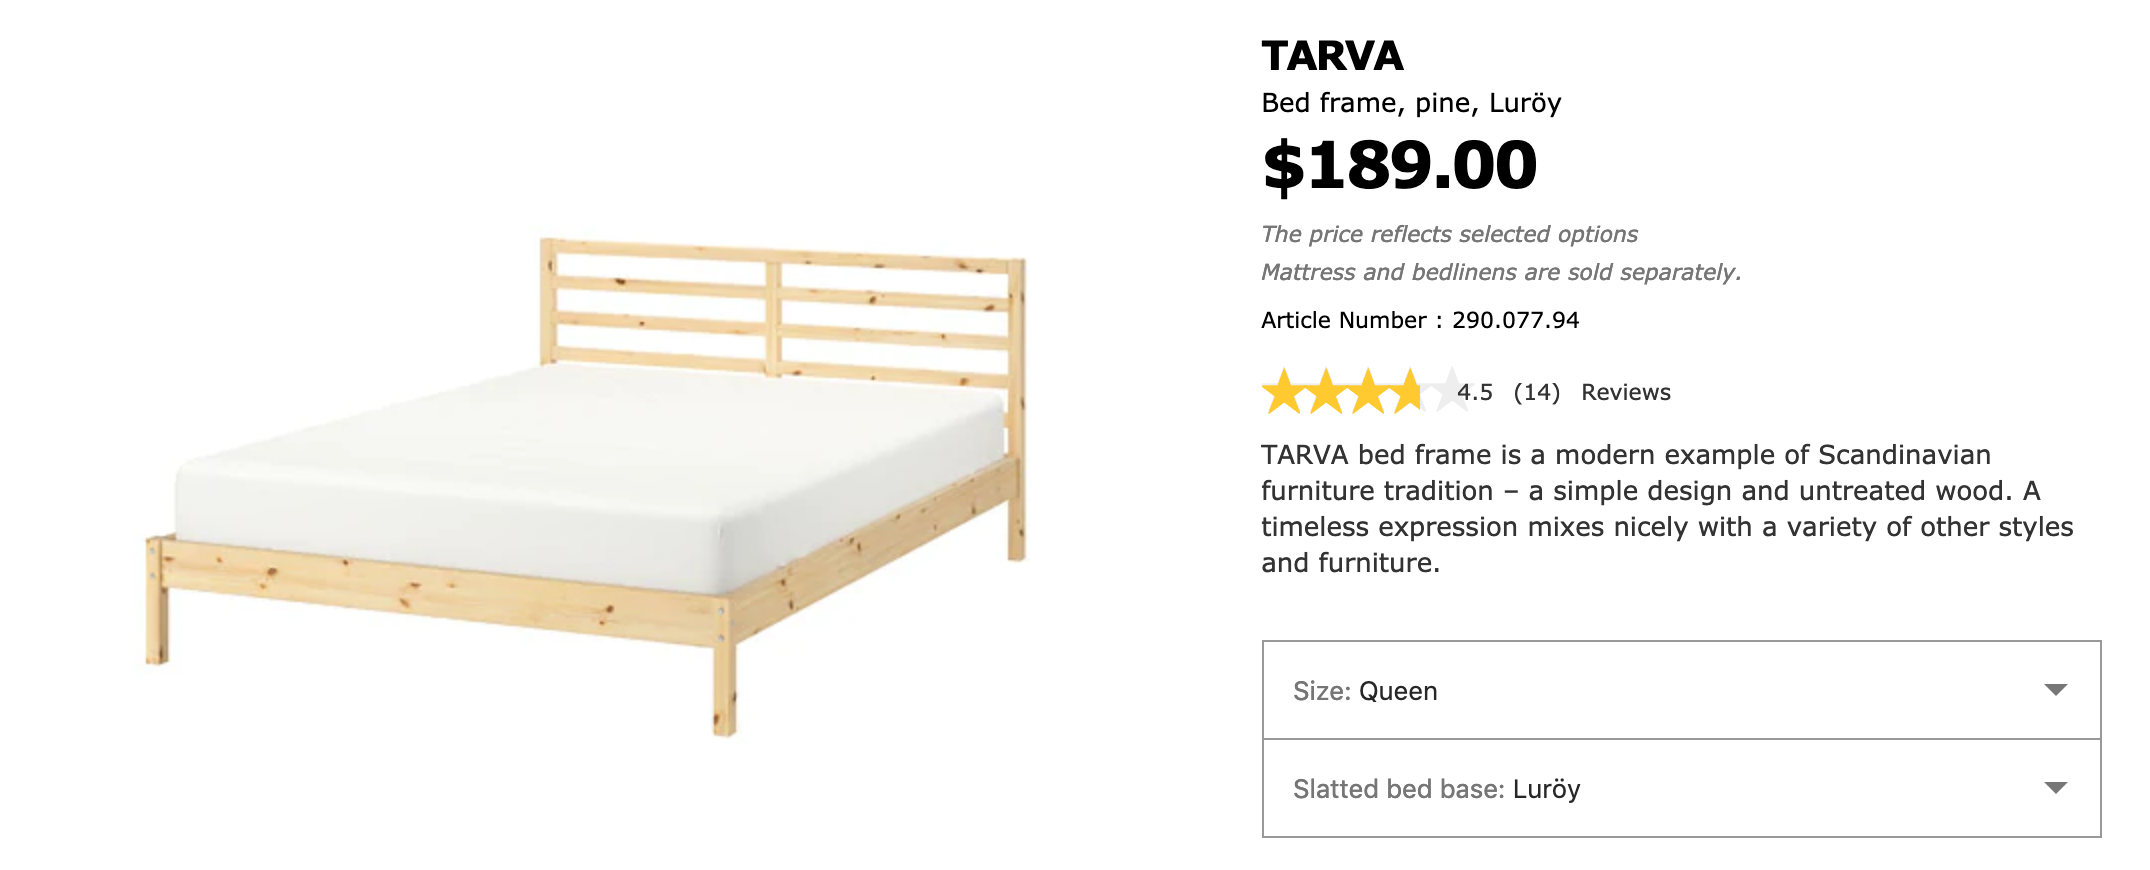 Tarva bed from IKEA, price $189